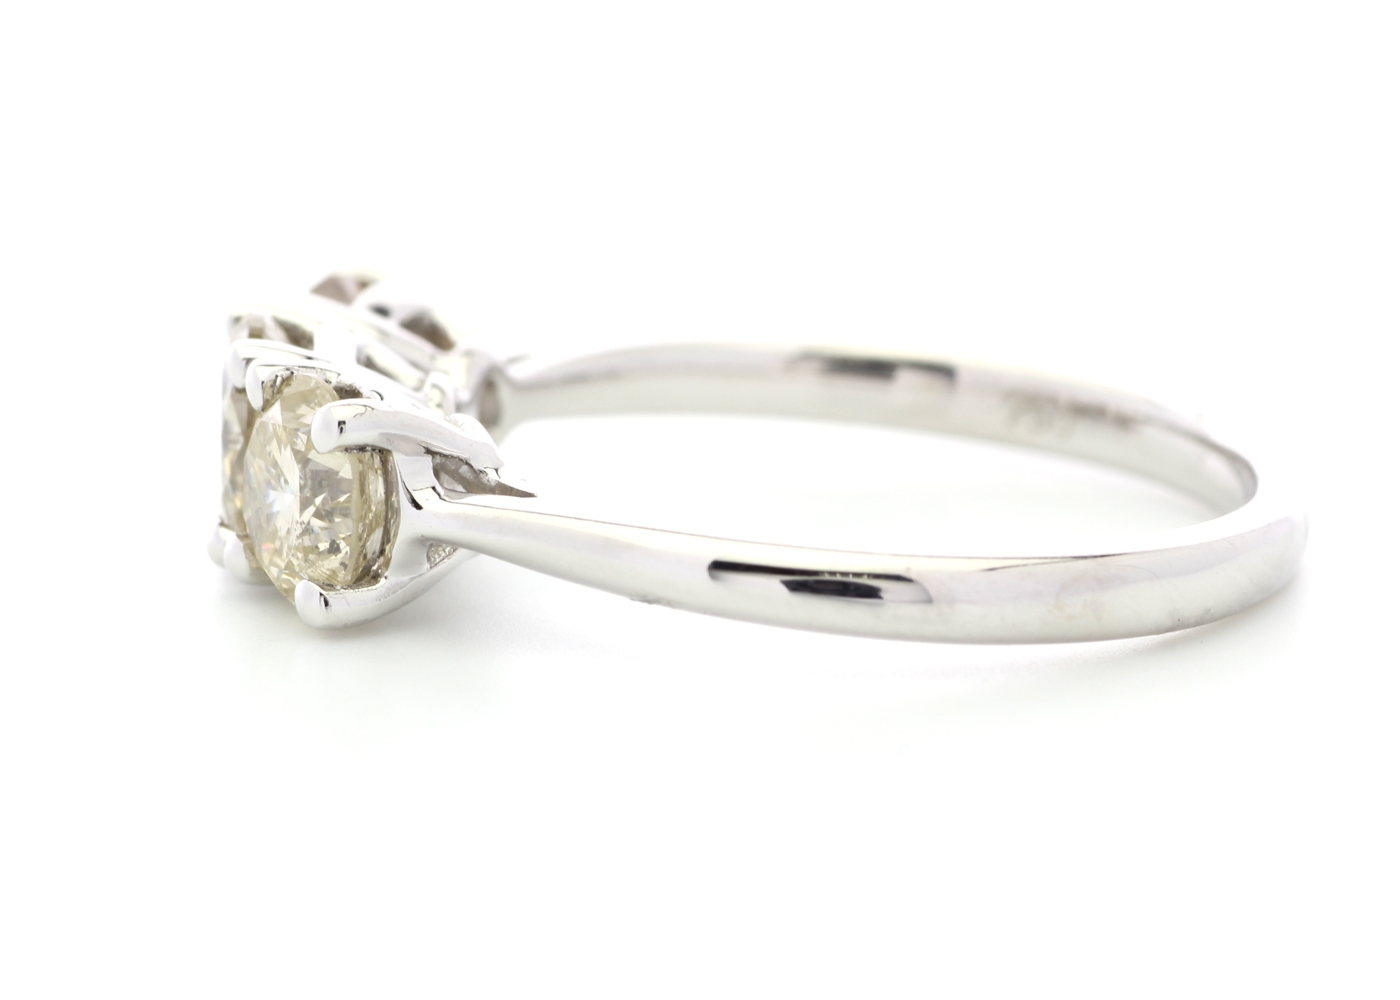 18ct White Gold Three Stone Diamond Ring 1.58 Carats - Image 2 of 5